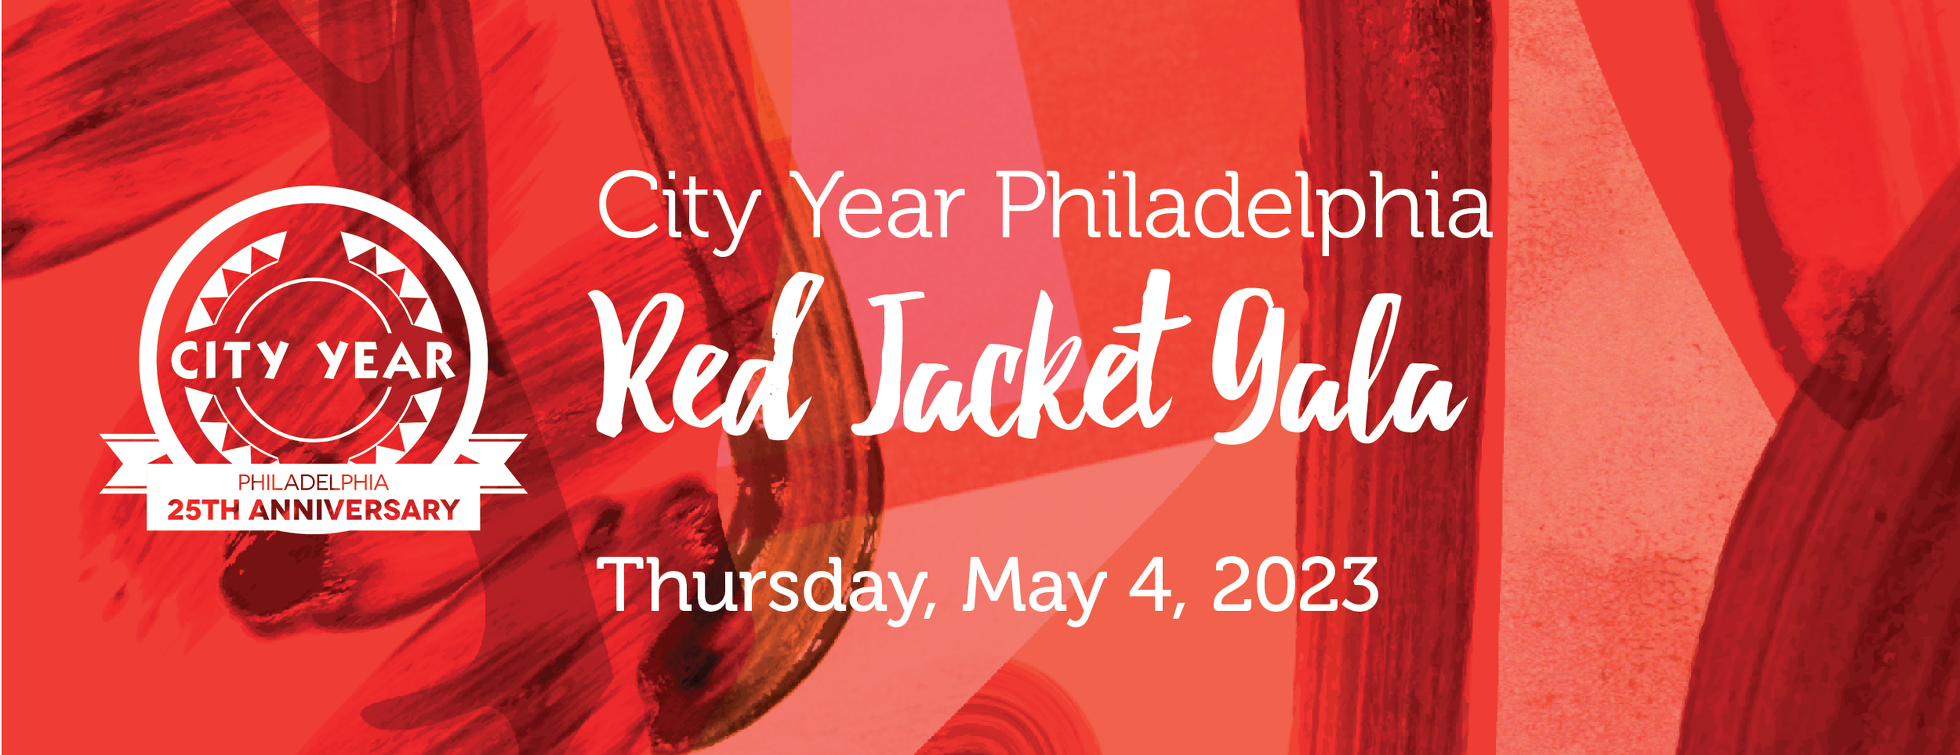 City Year Philadelphia's Red Jacket Gala